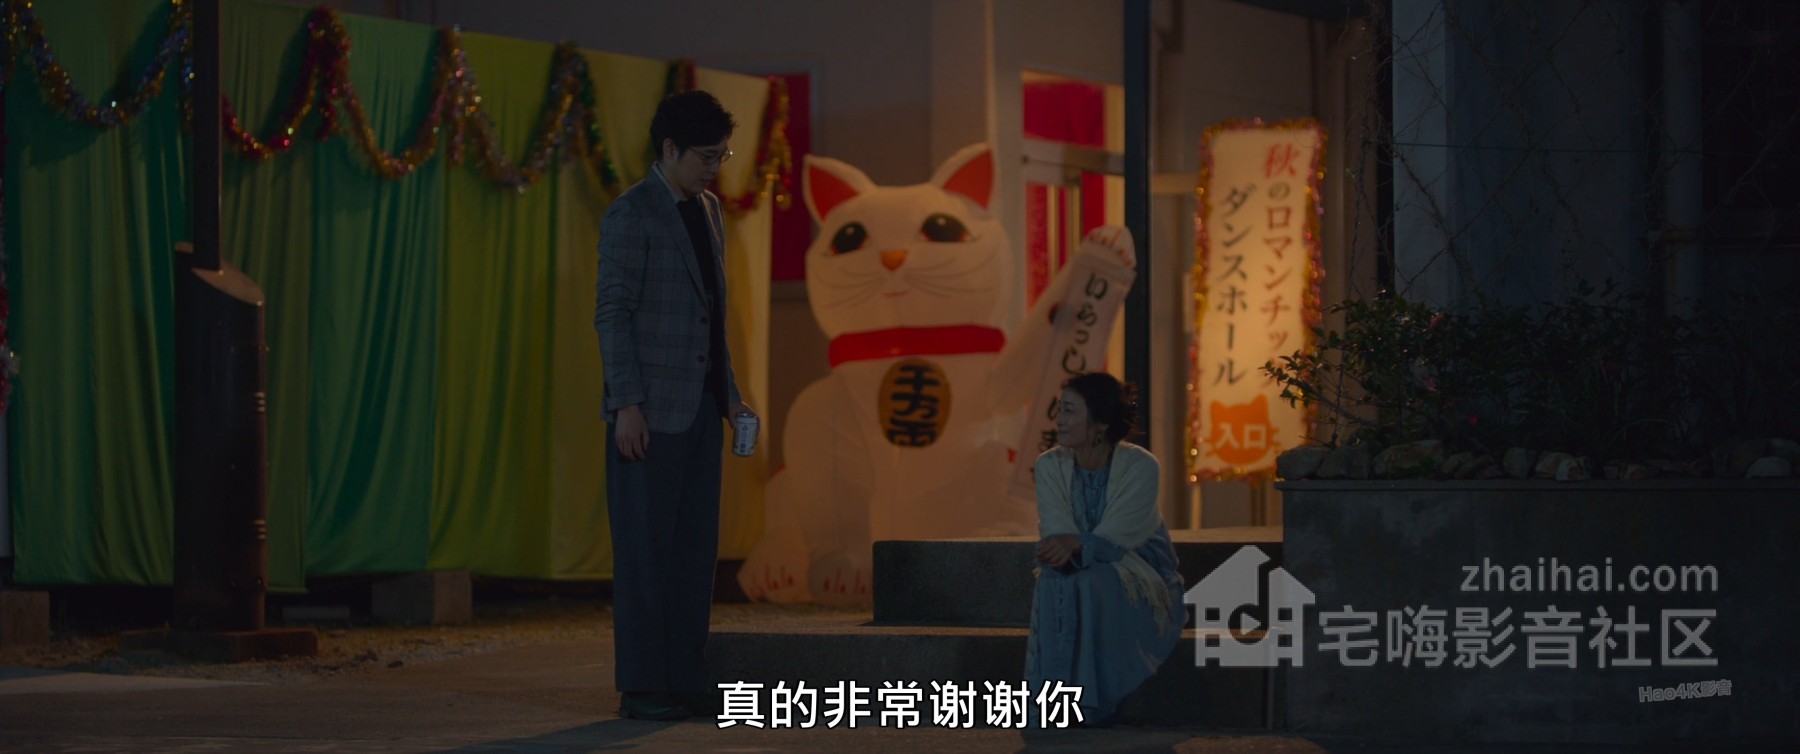 The.Island.Of.Cats.2019.JAPANESE.1080p.BluRay.x264.DTS-iKiW.mkv_20200913_132720.753.jpg